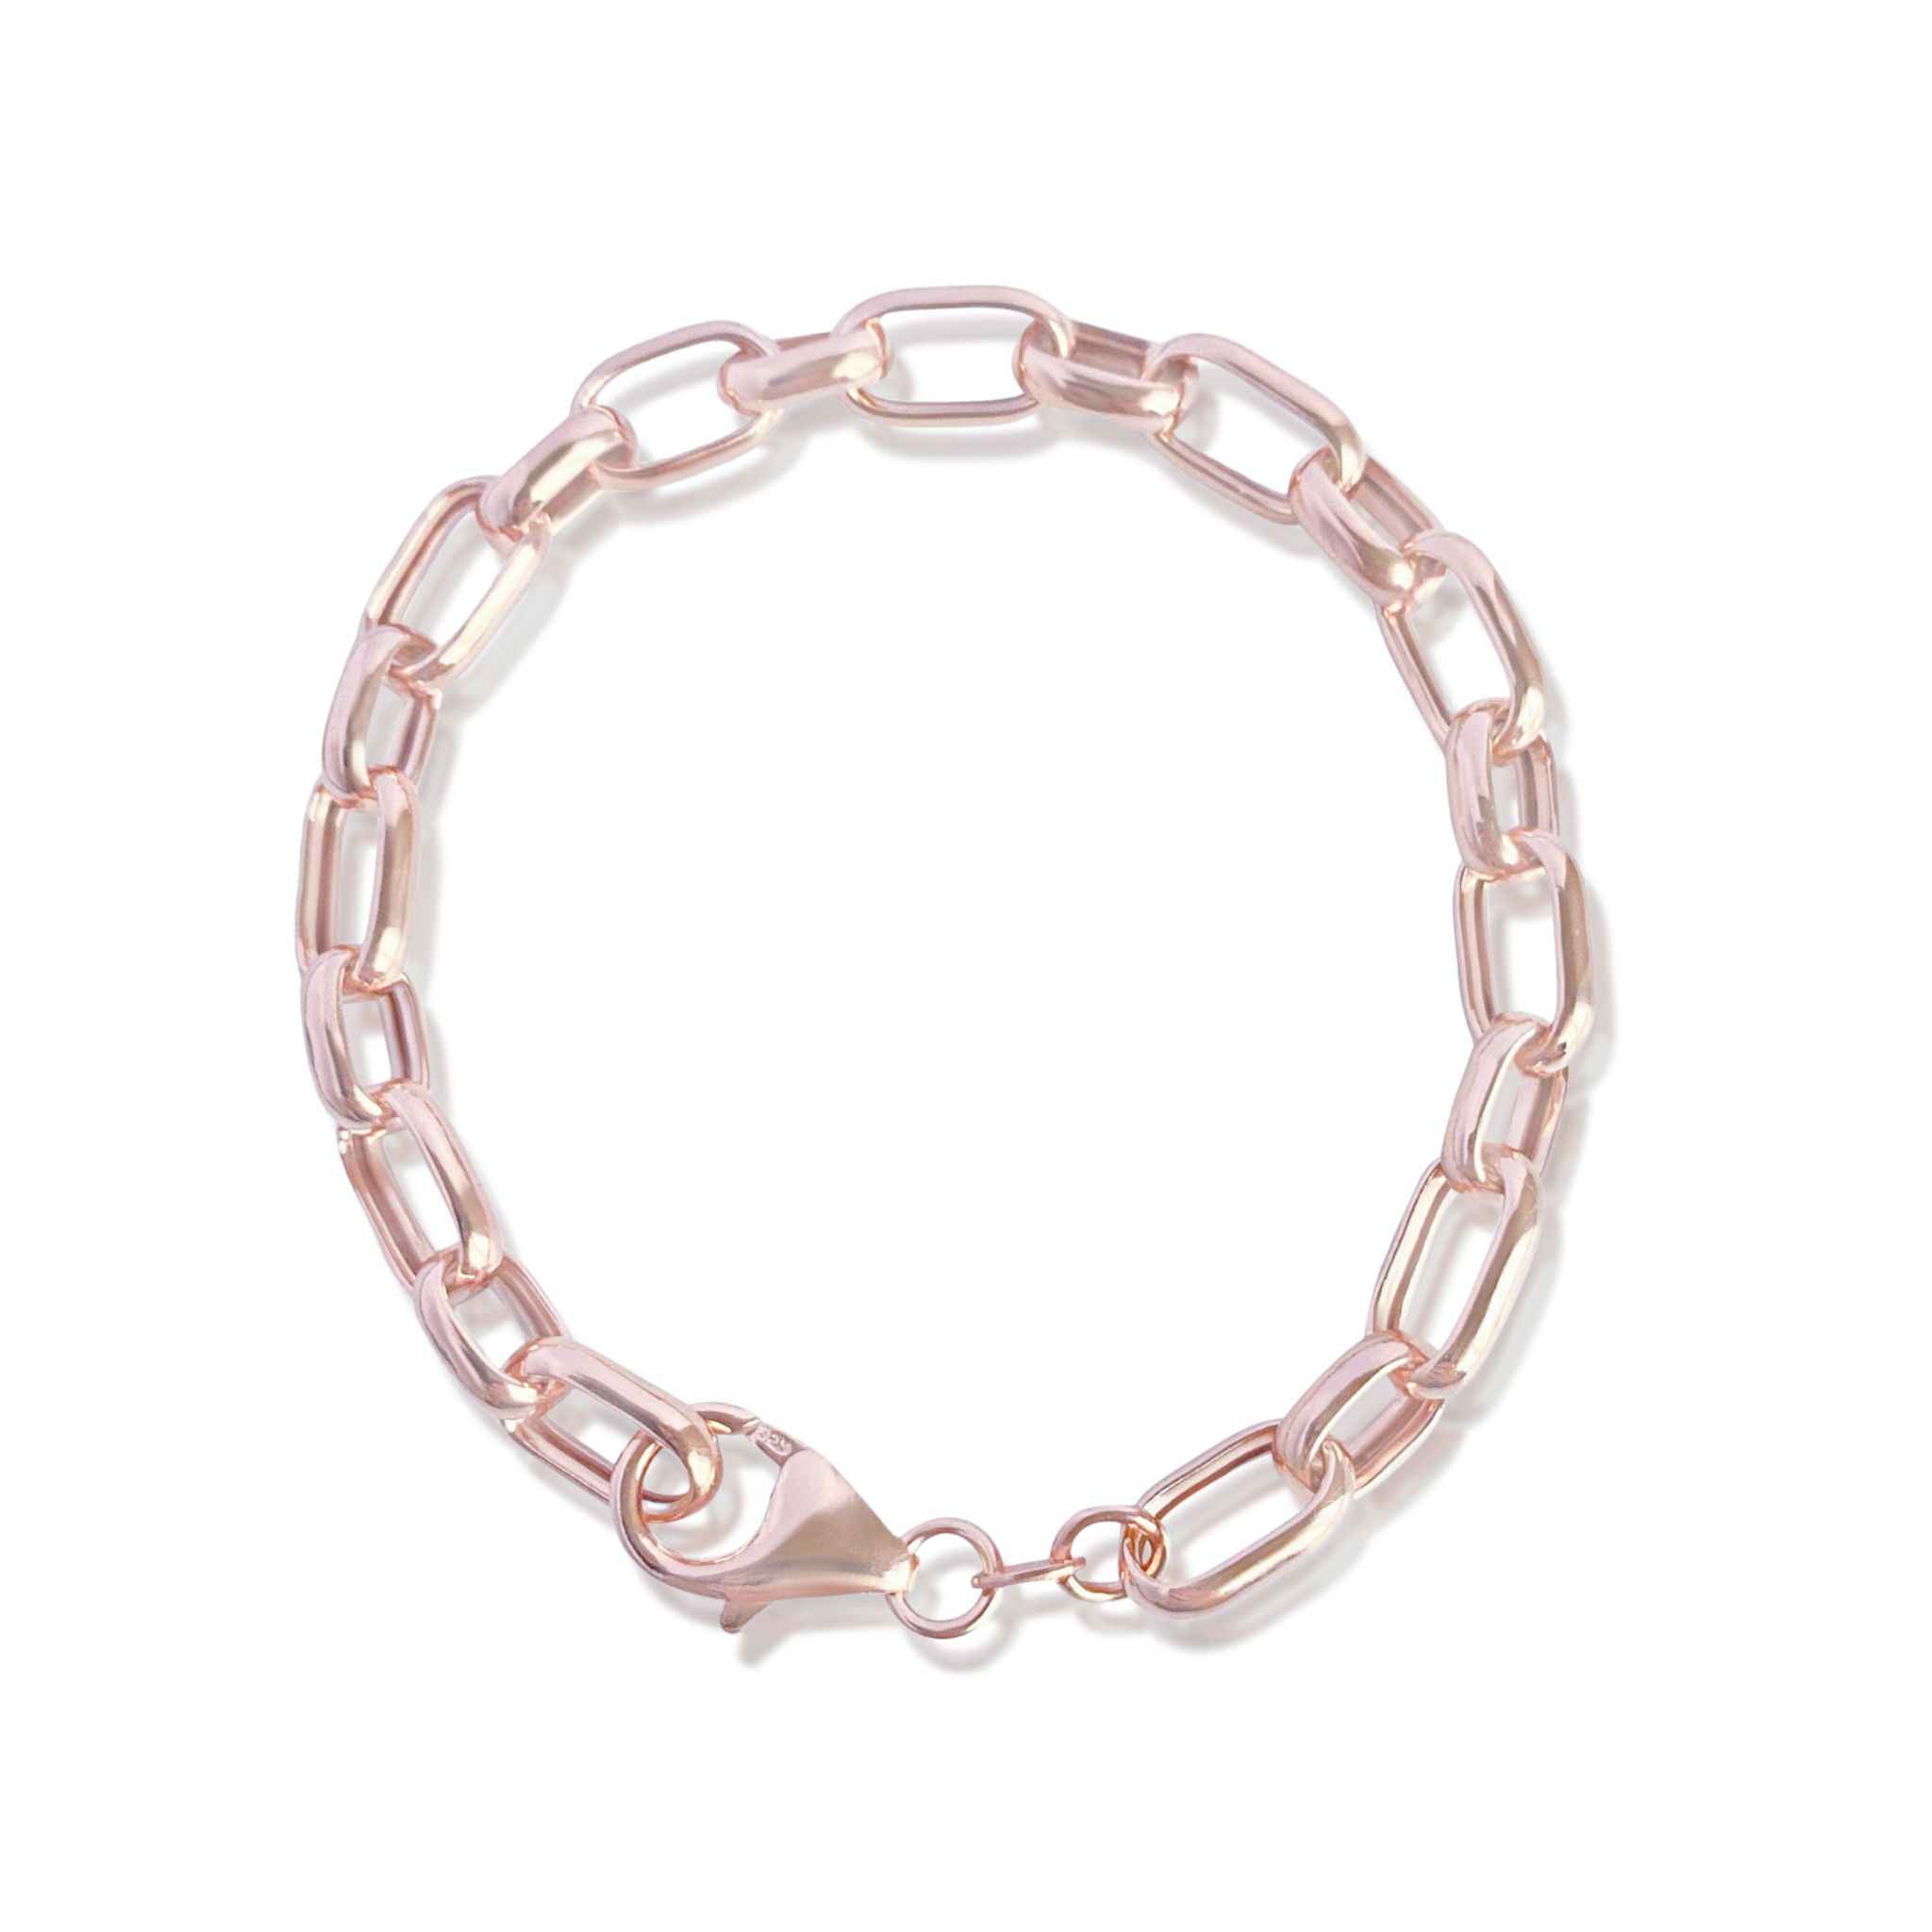 Graceful Rectangular Chain Link Bracelet in rose gold by Alessandra James.